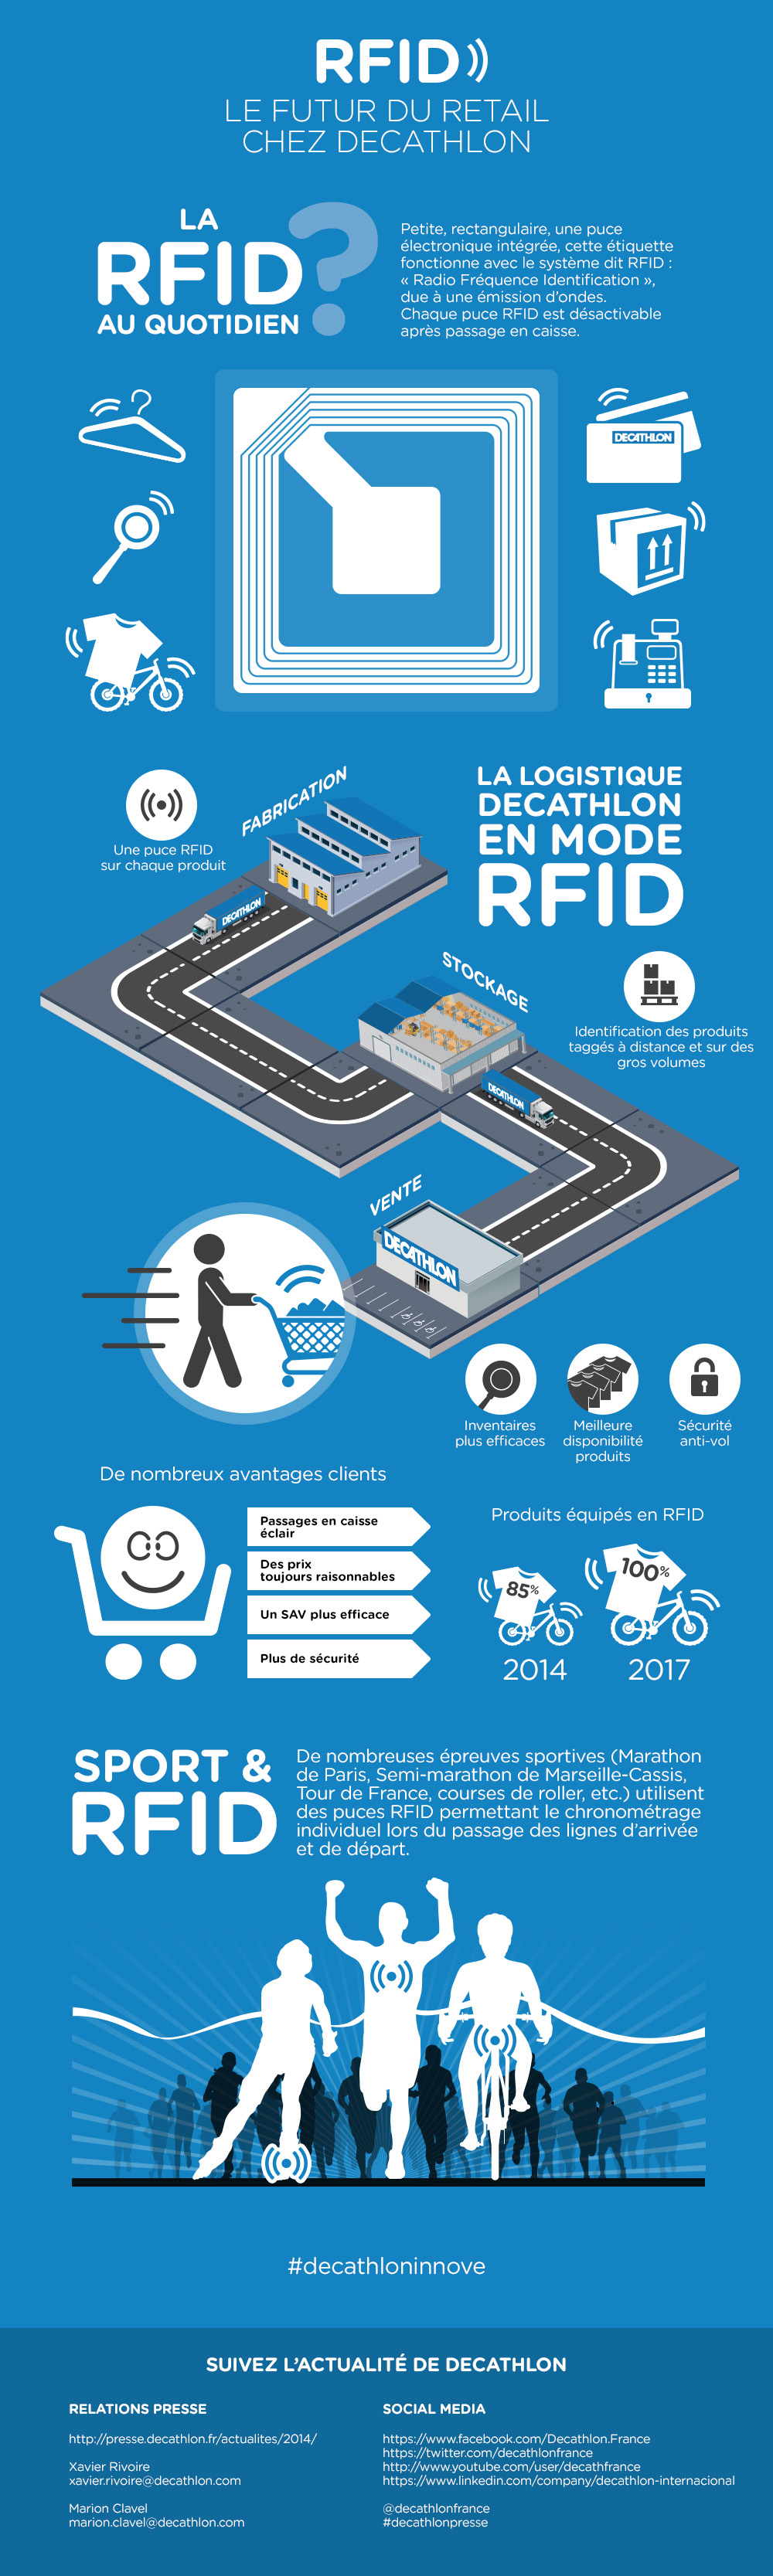 Infographie Decathlon RFID